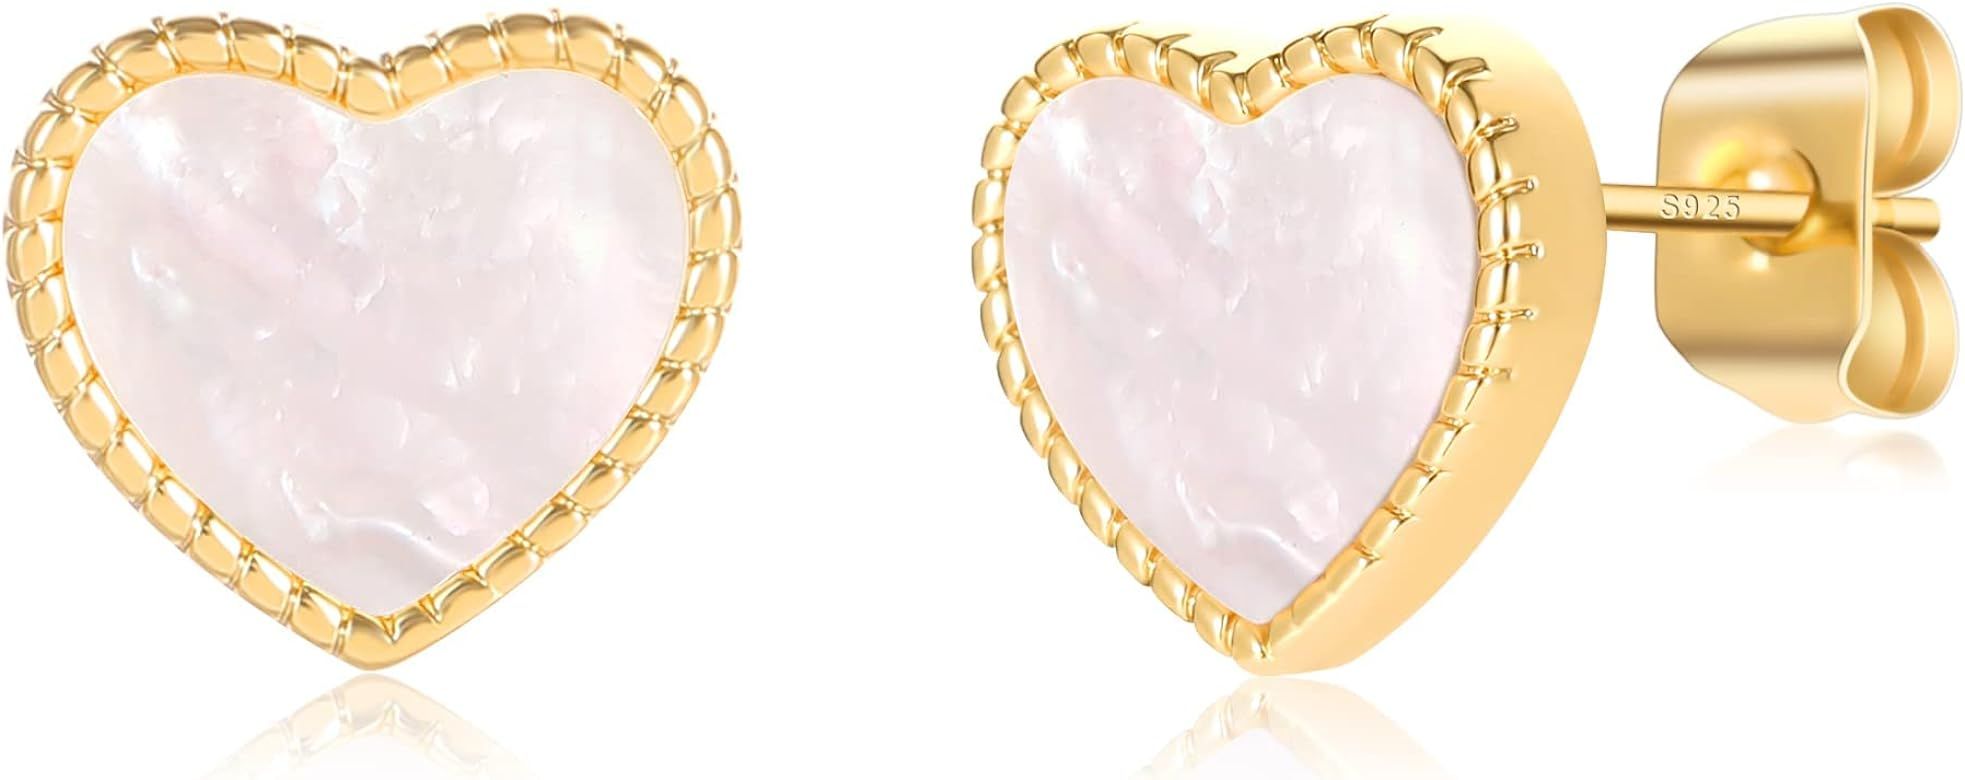 SOUALLHA Gold Heart Earrings for Women, 18K Gold Plated Mother of Pearl Earrings, Hypoallergenic ... | Amazon (US)